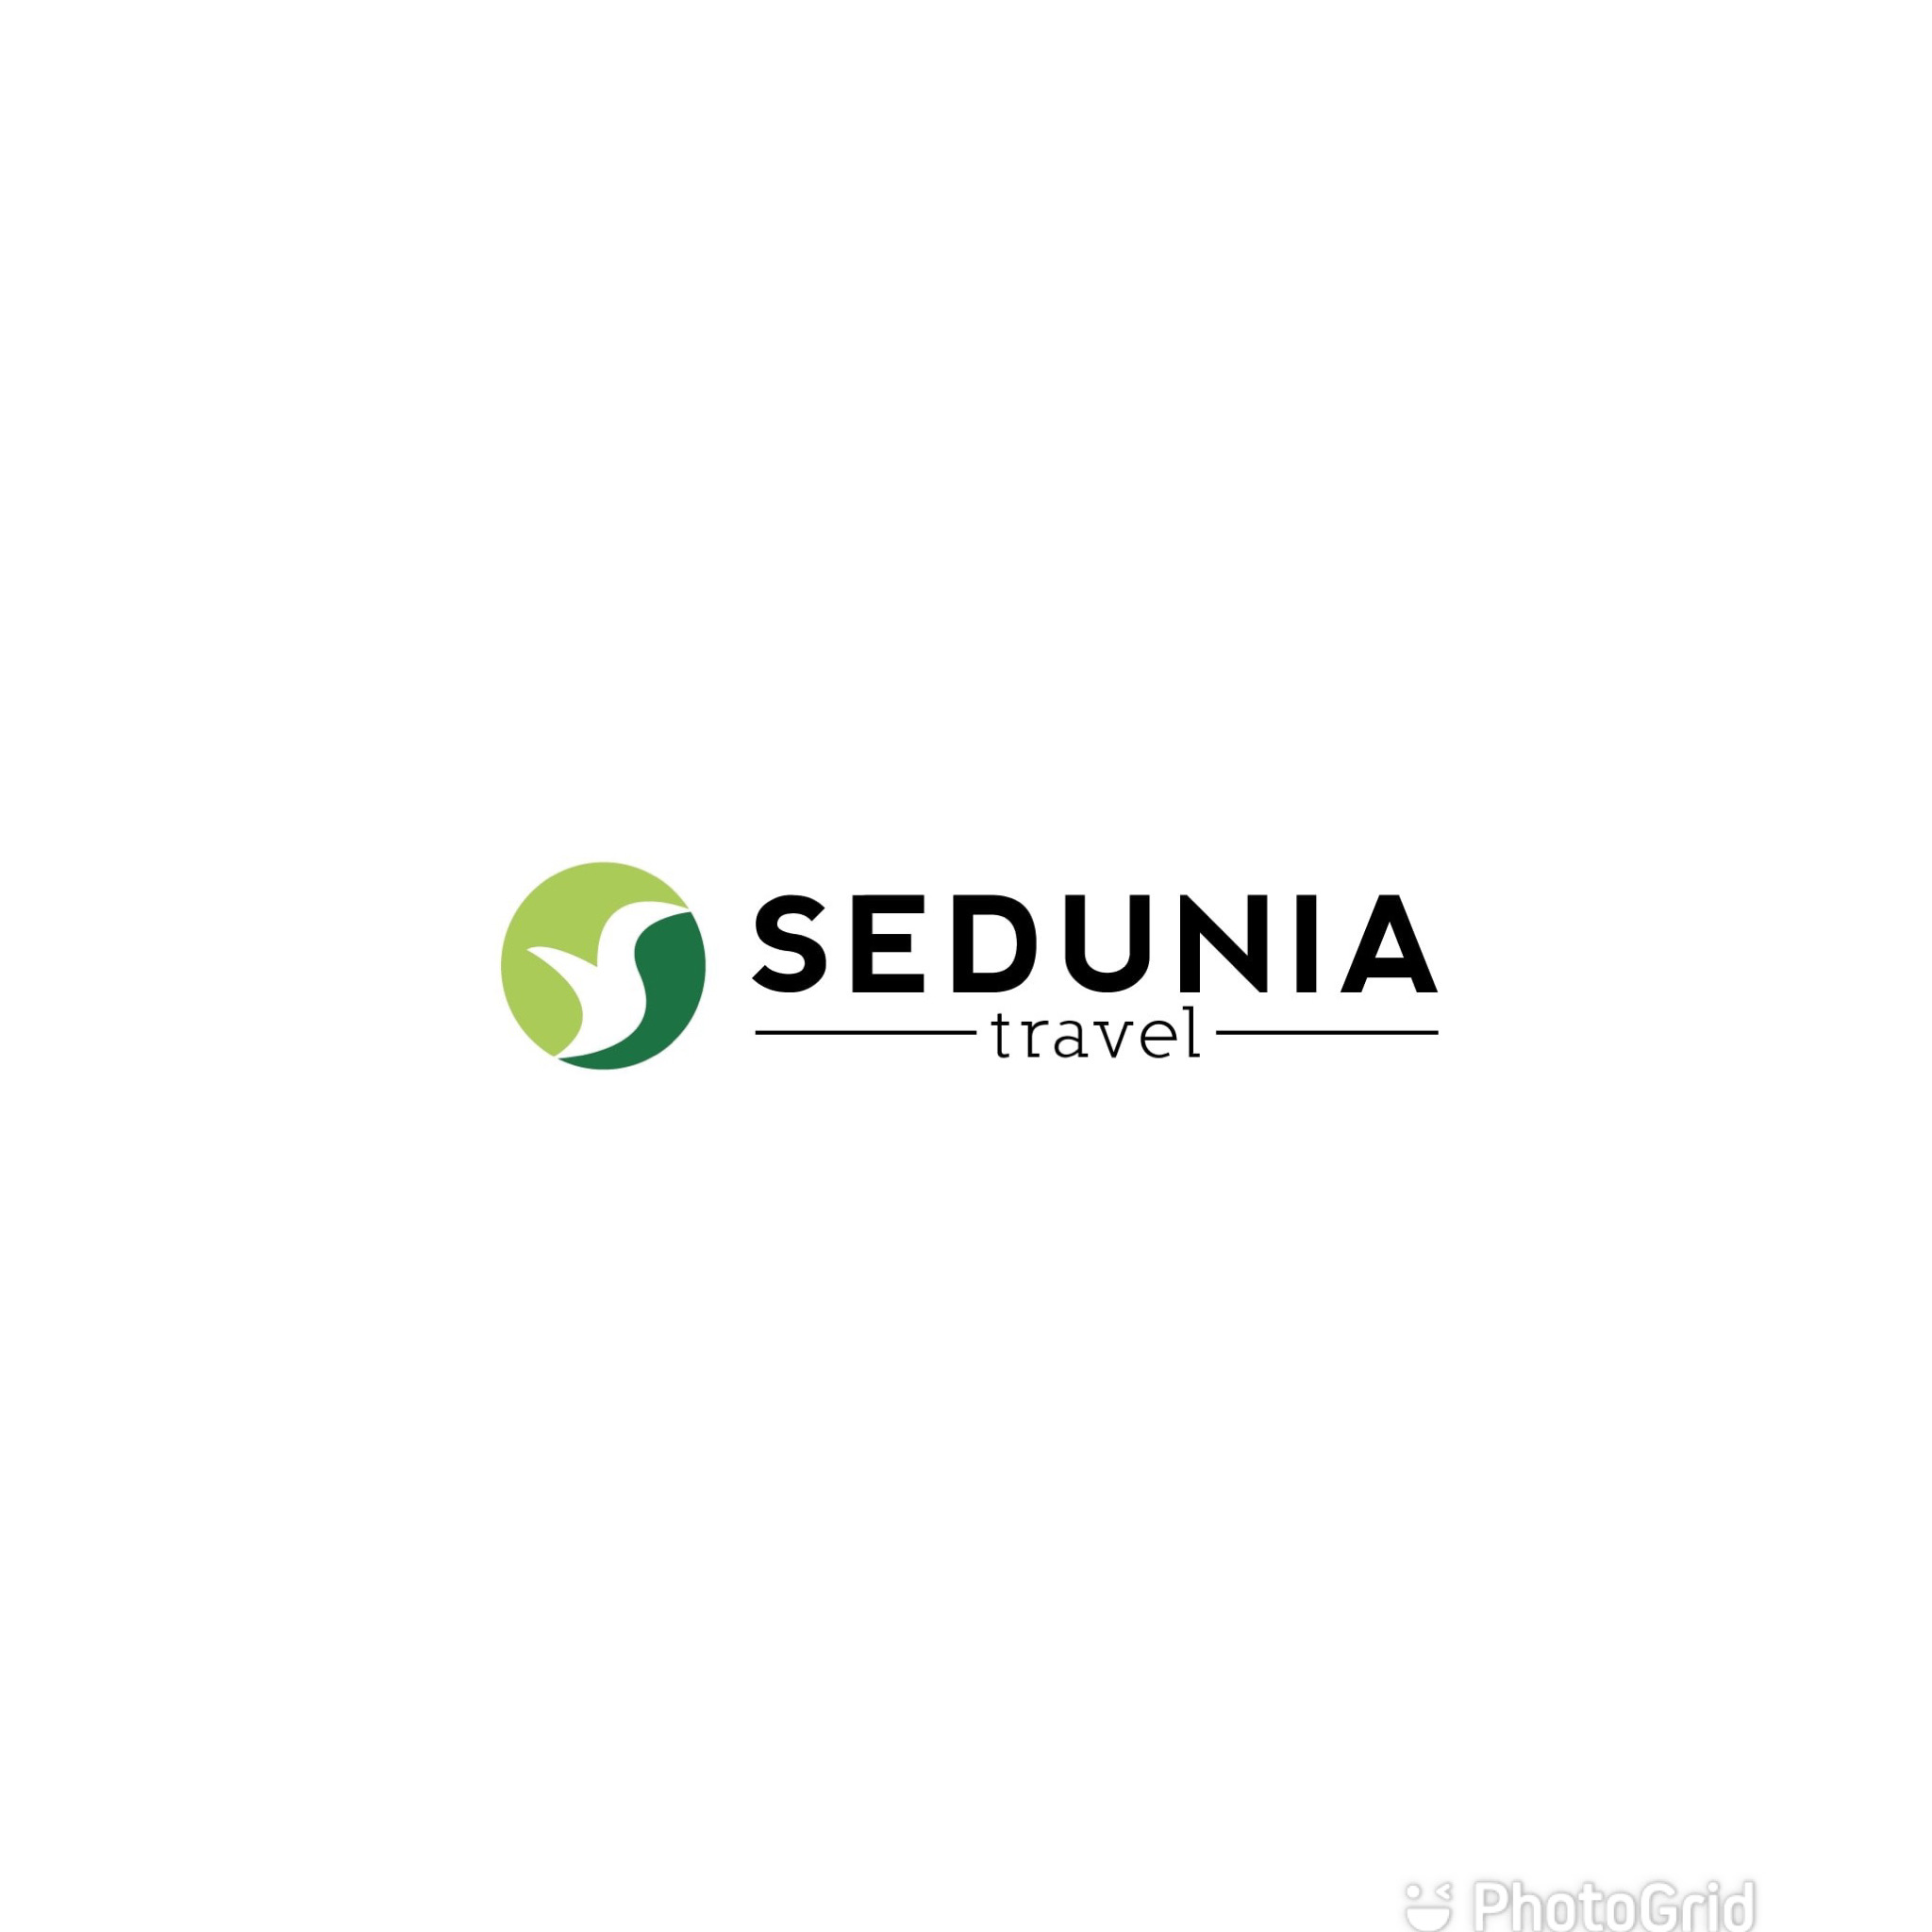 Sedunia Travel — 2020金榜榜单全马最佳旅行社